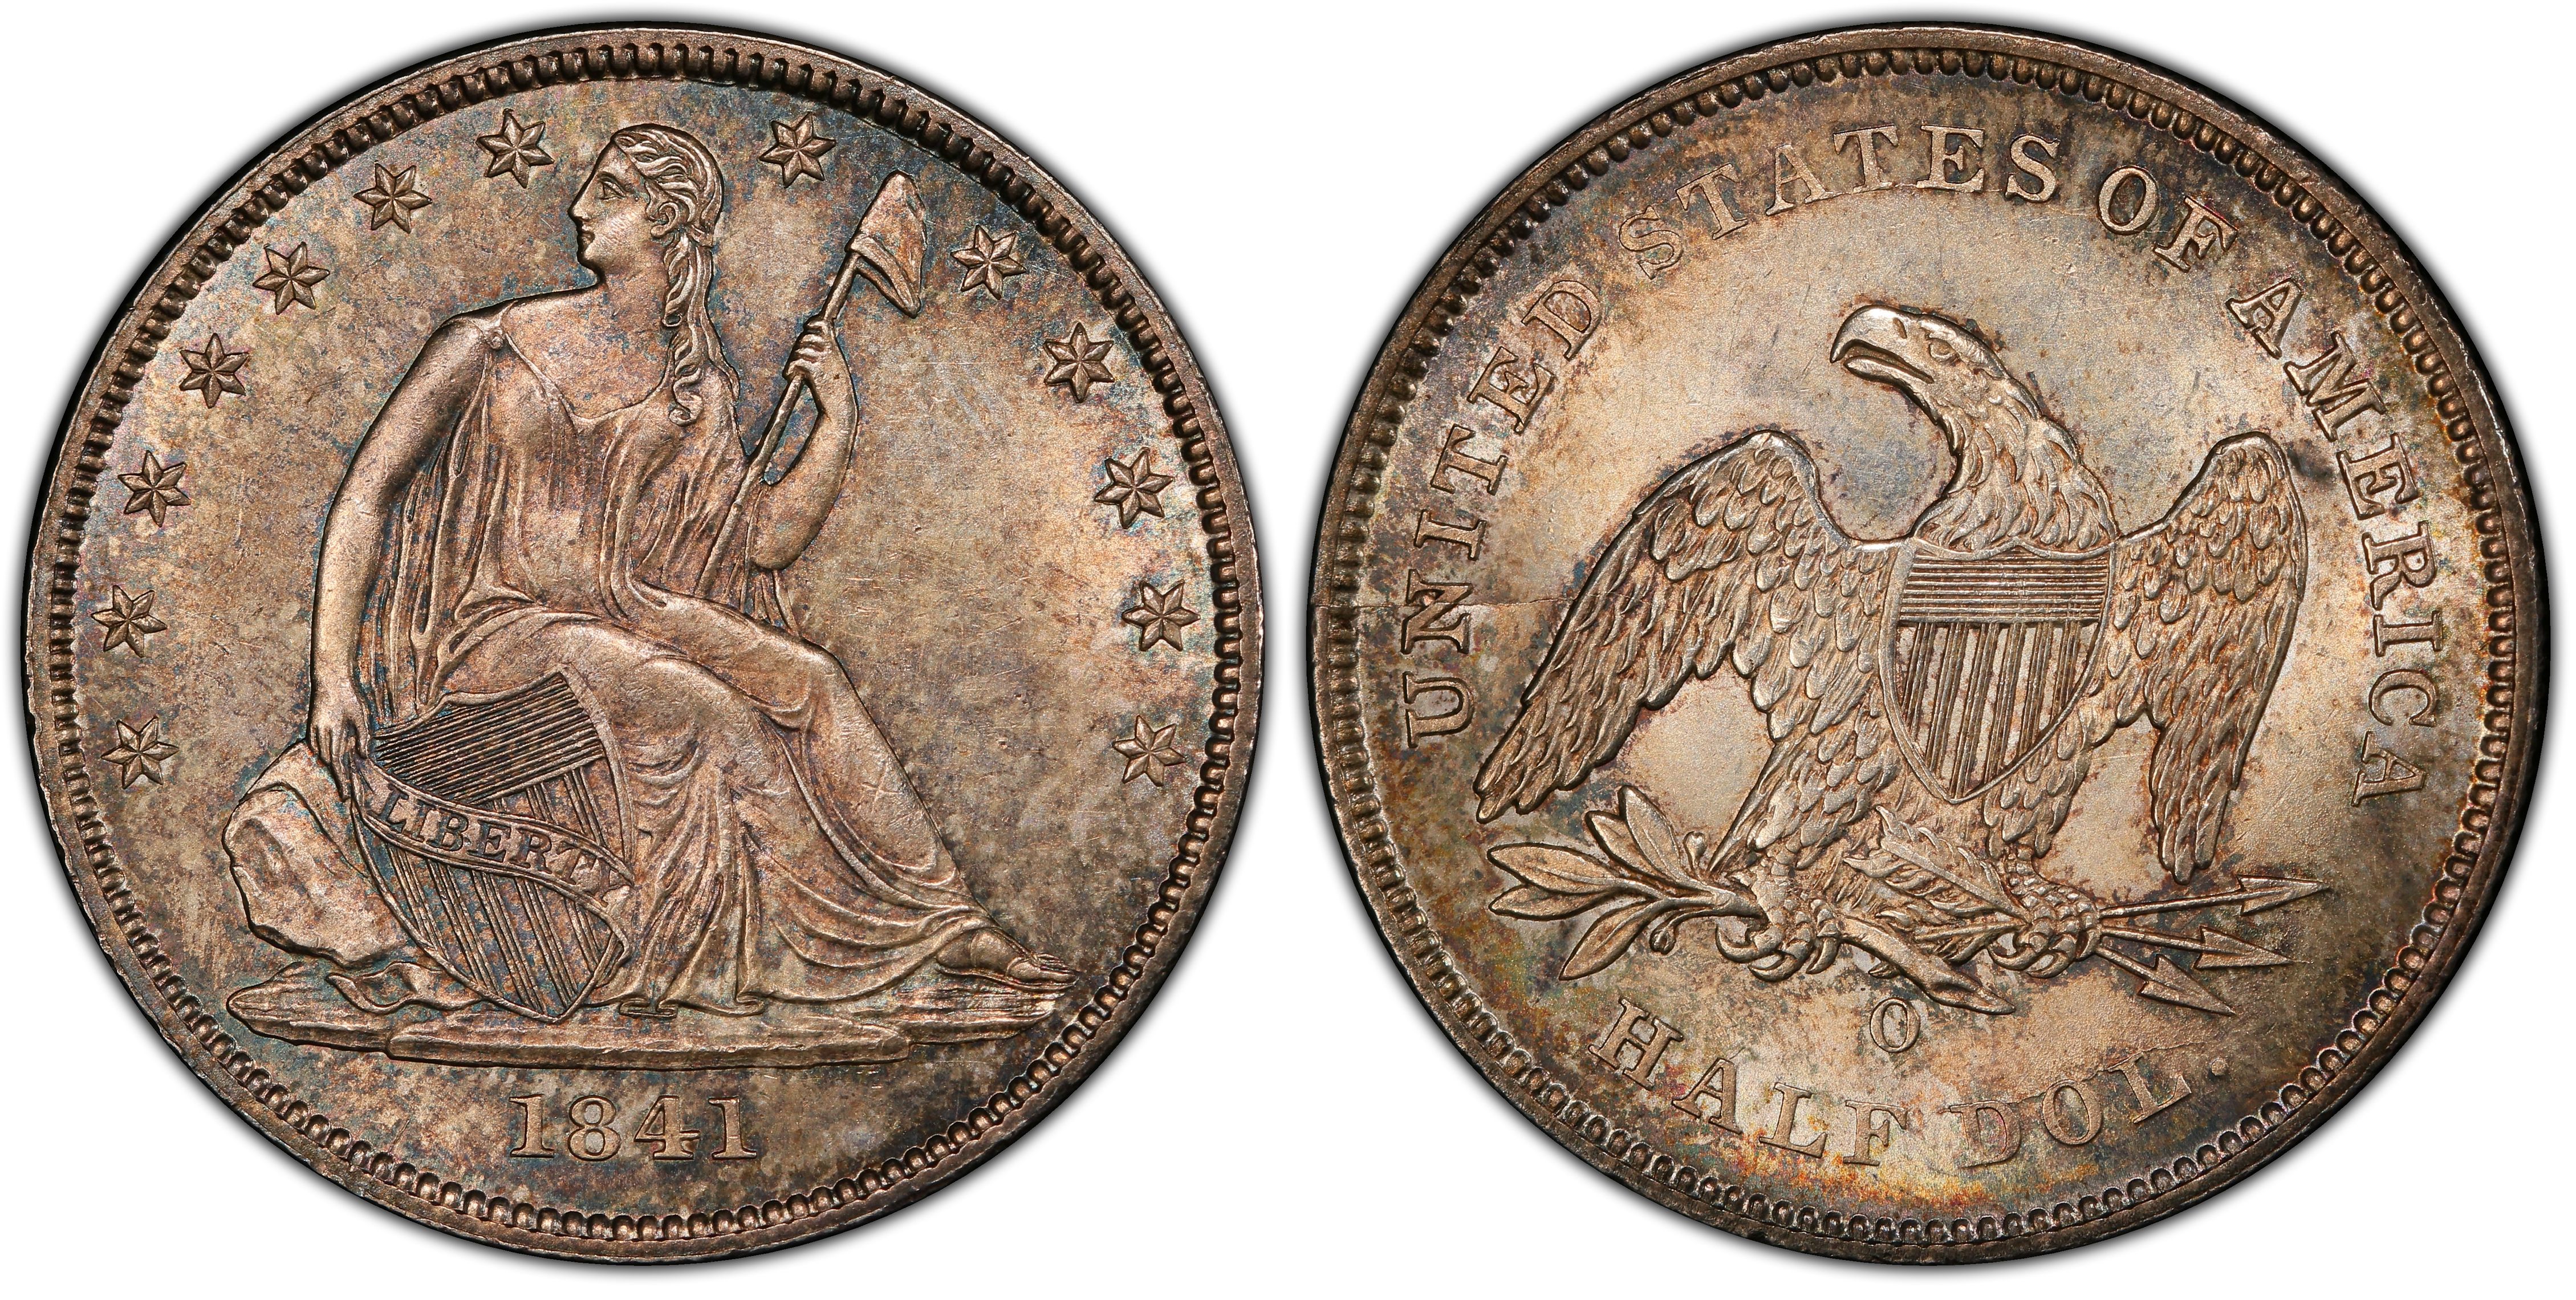 1841-O 50C (Regular Strike) Liberty Seated Half Dollar - PCGS